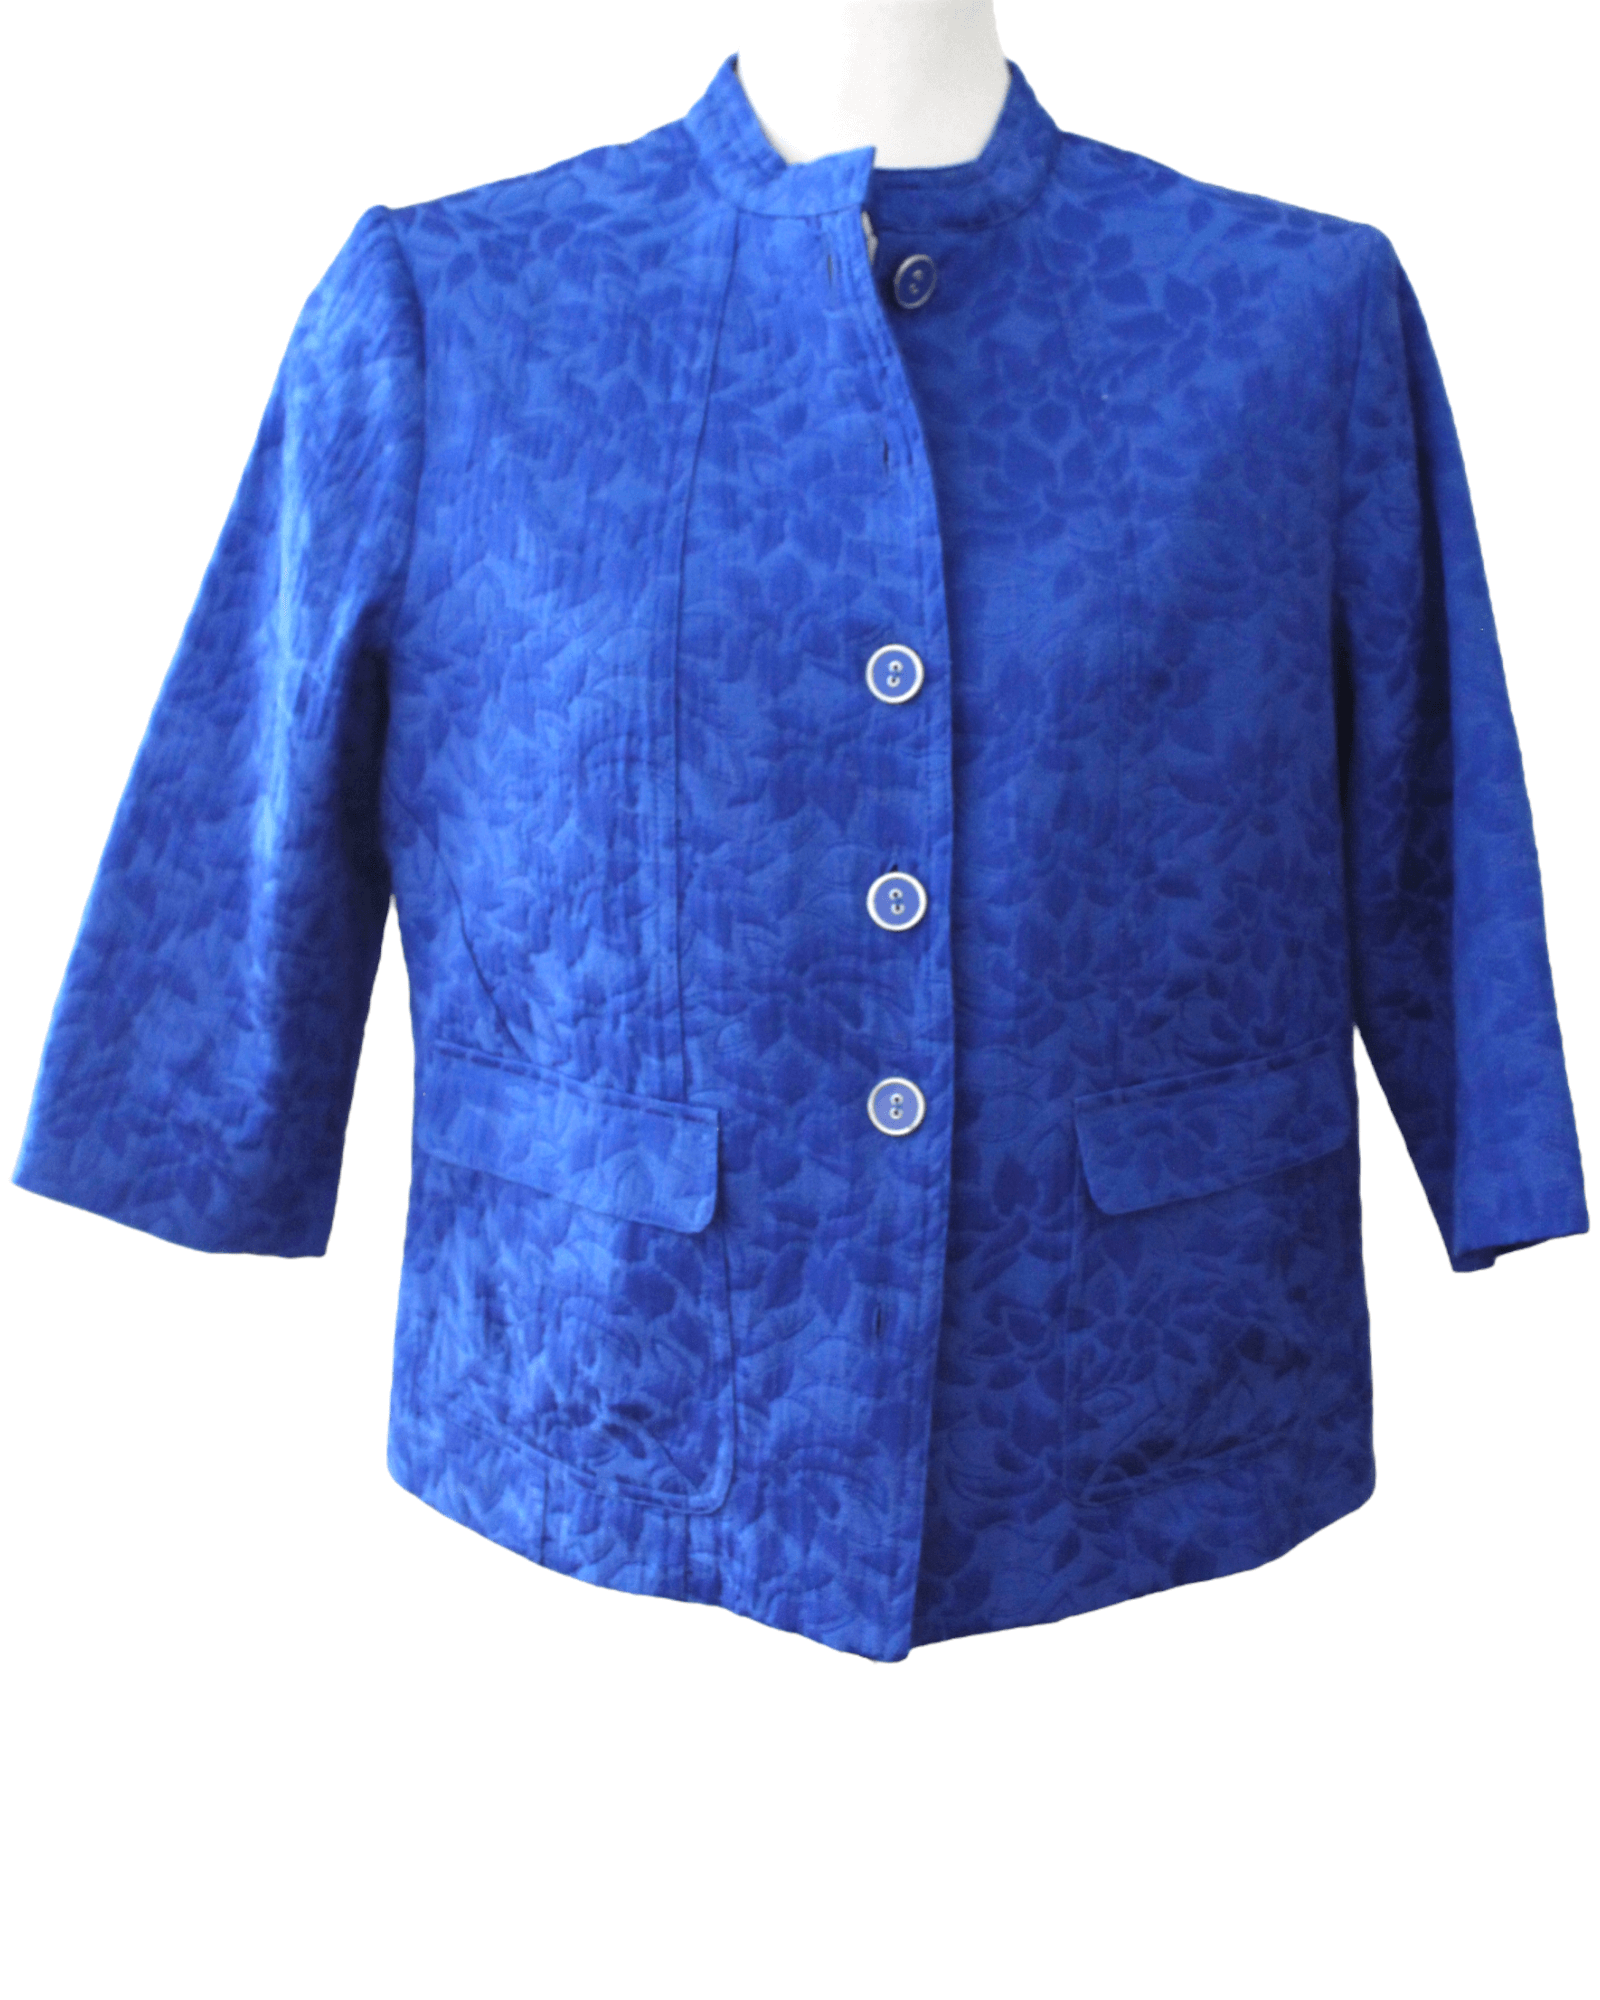 Bright Winter REBECCA MALONE blue floral jacquard jacket